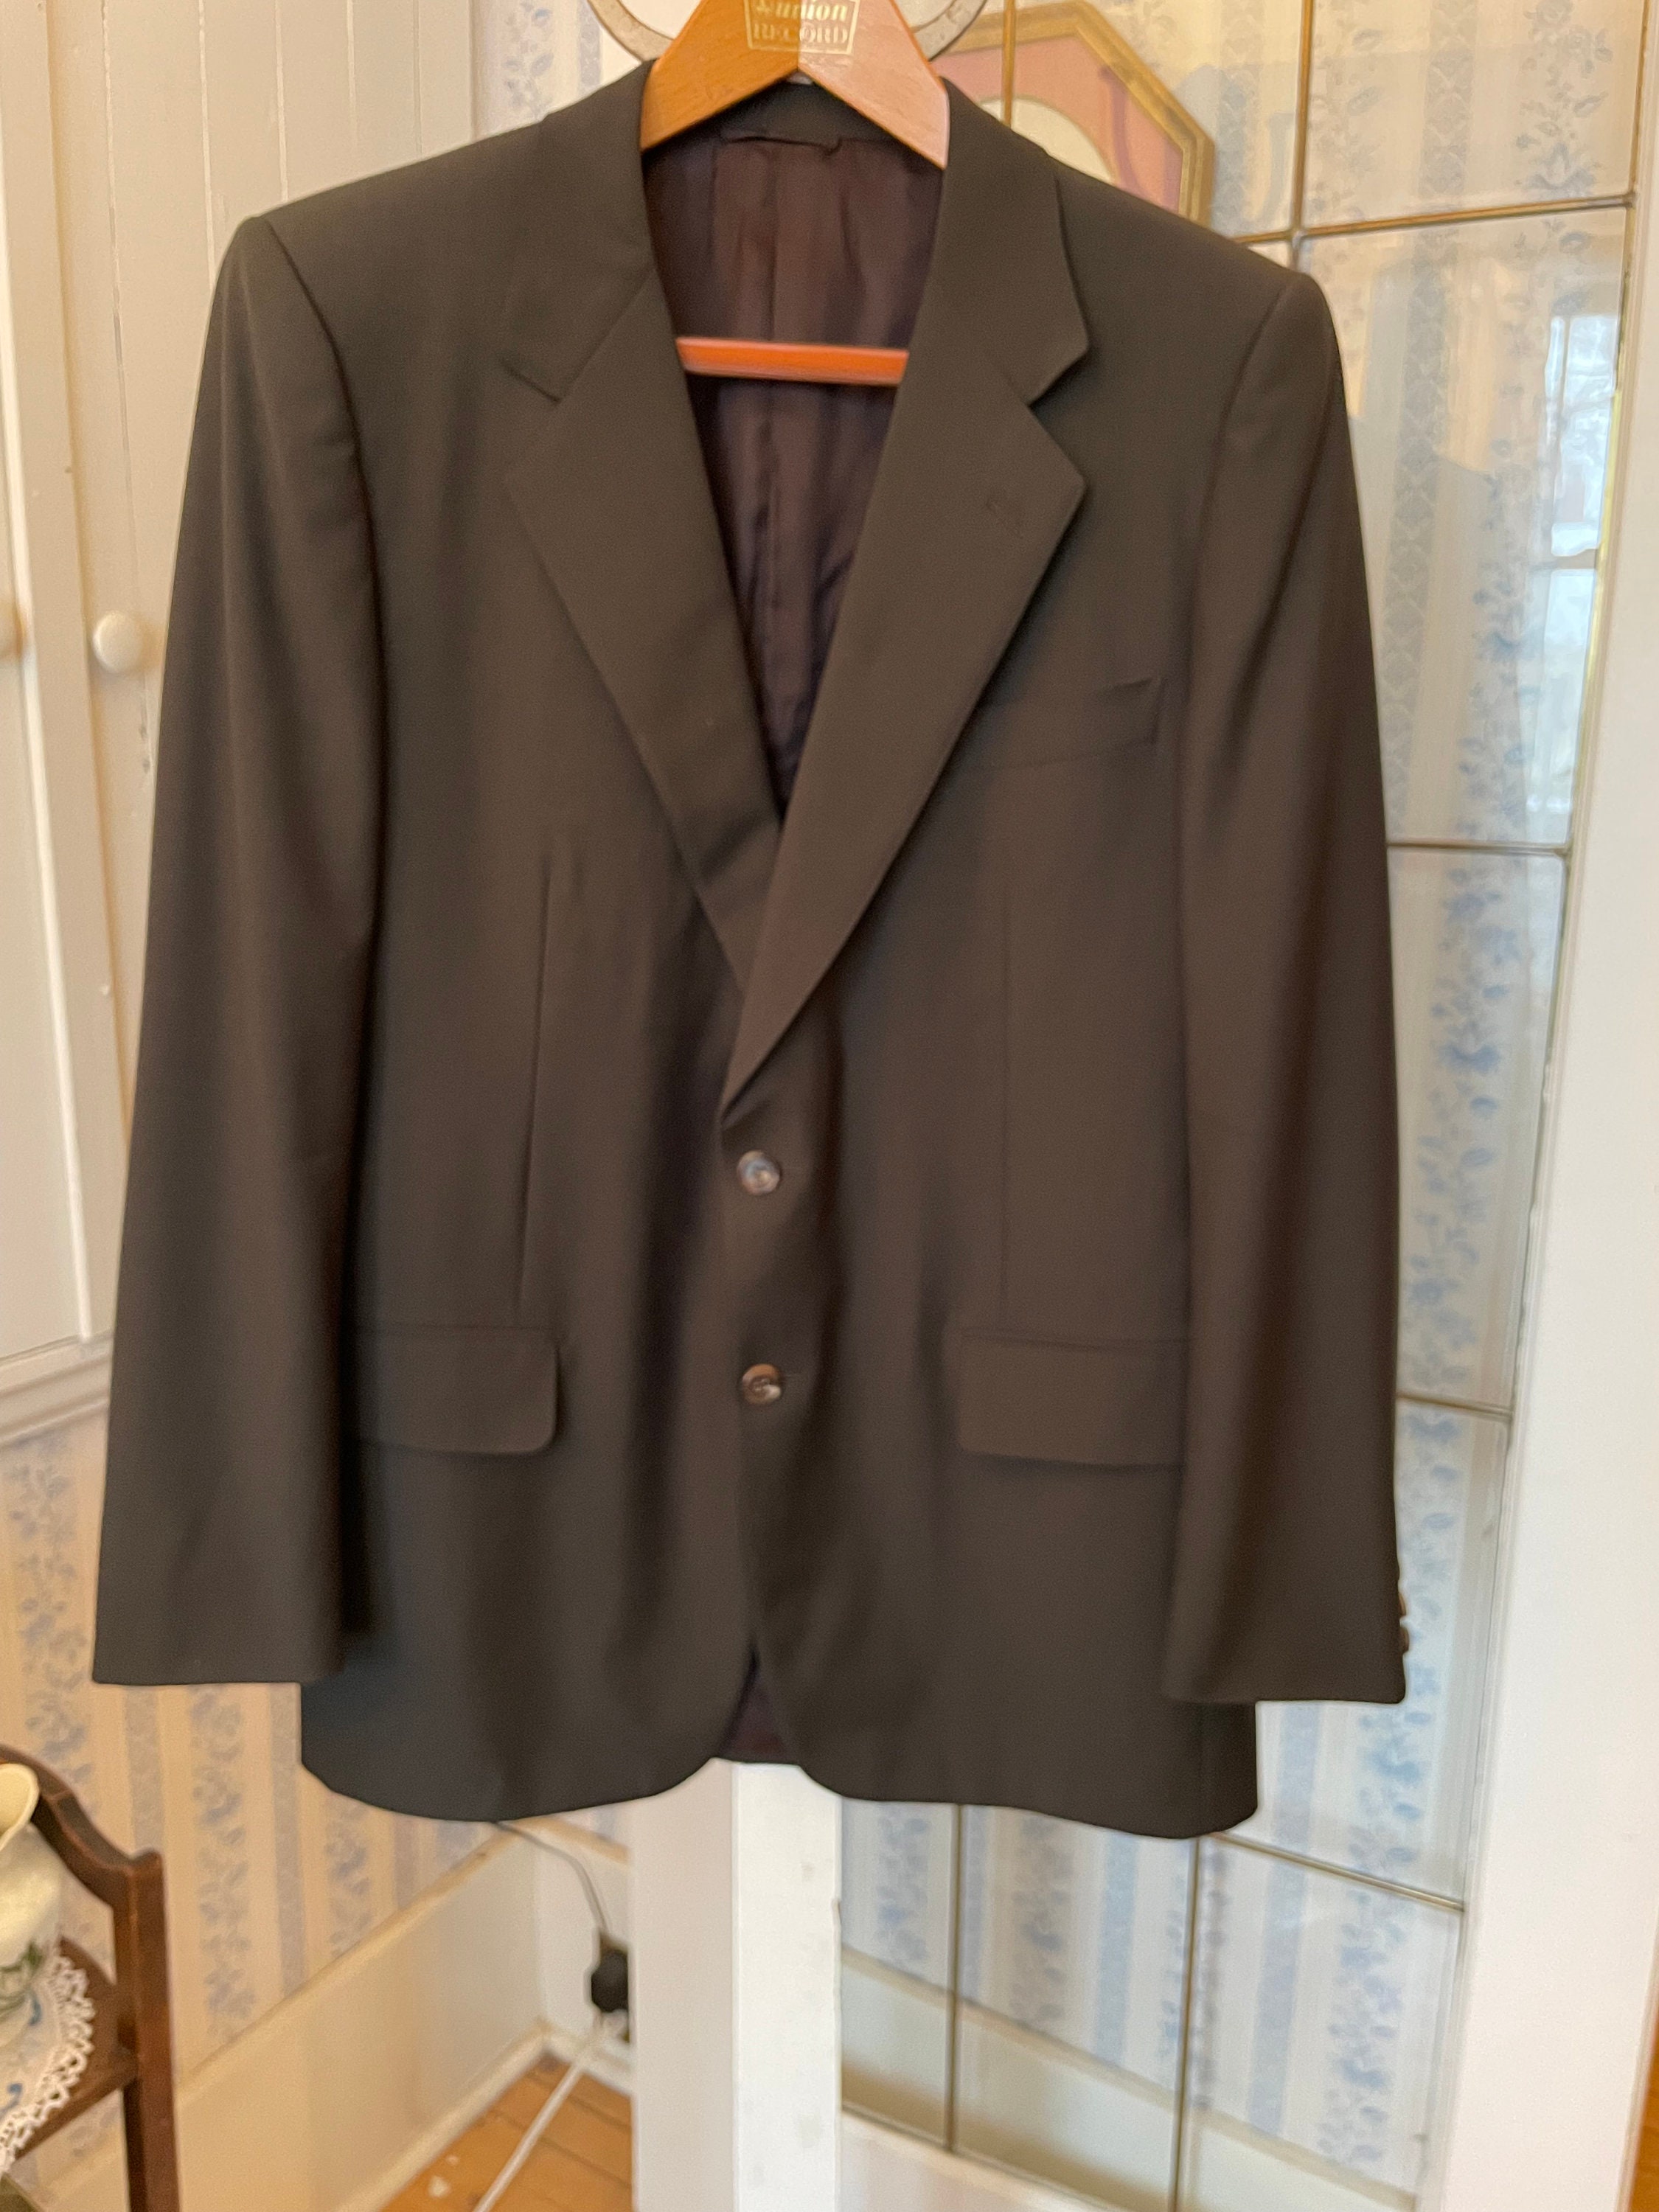 discounted online sales Vintage brown jacket, blazer, sport coat (B772),  dark brown lightweight wool jacket, blazer, sport coat, made in Italy